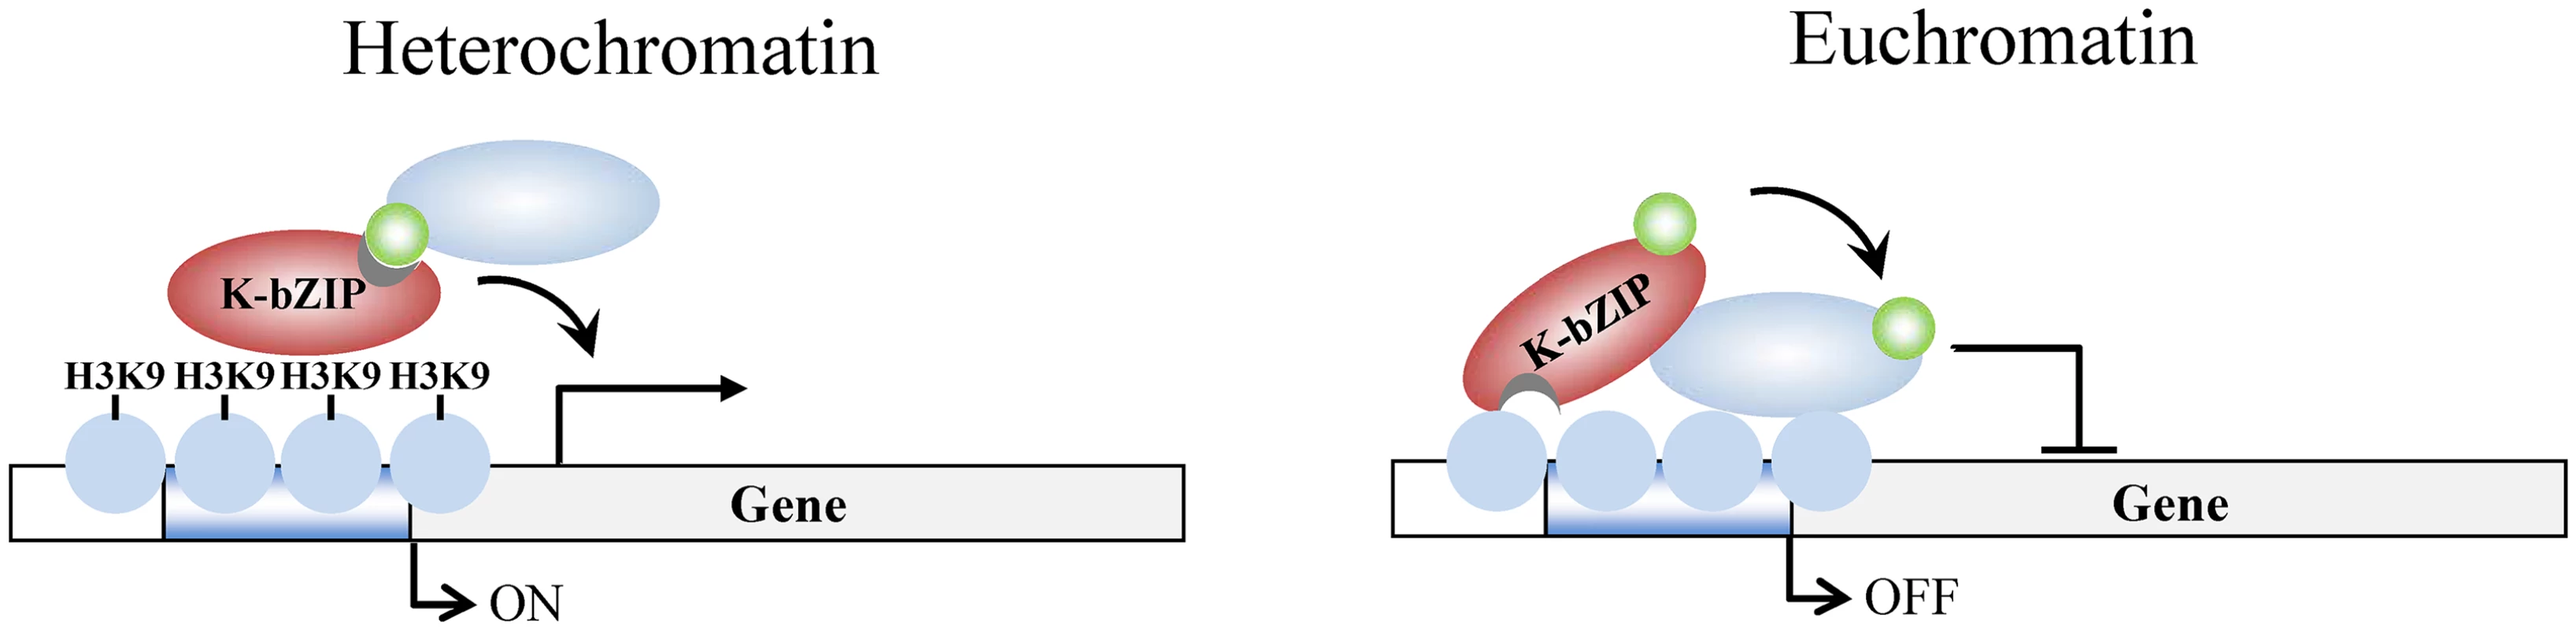 Model of K-bZIP regulation of viral gene expression in heterochromatin and euchromatin regions of the KSHV genome during reactivation.